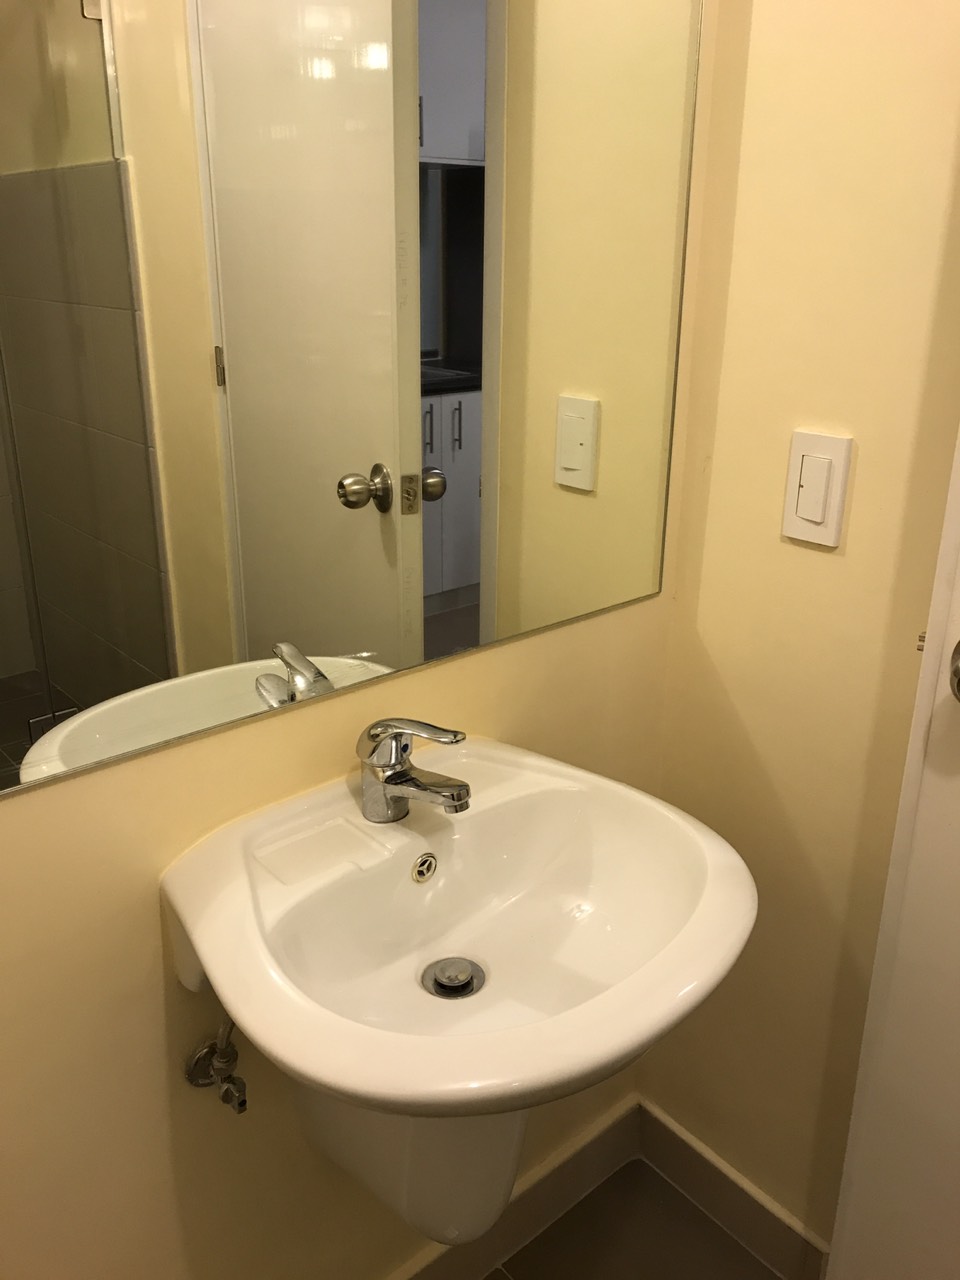 Studio Condo For Rent Avida Cityflex Bathroom View 3